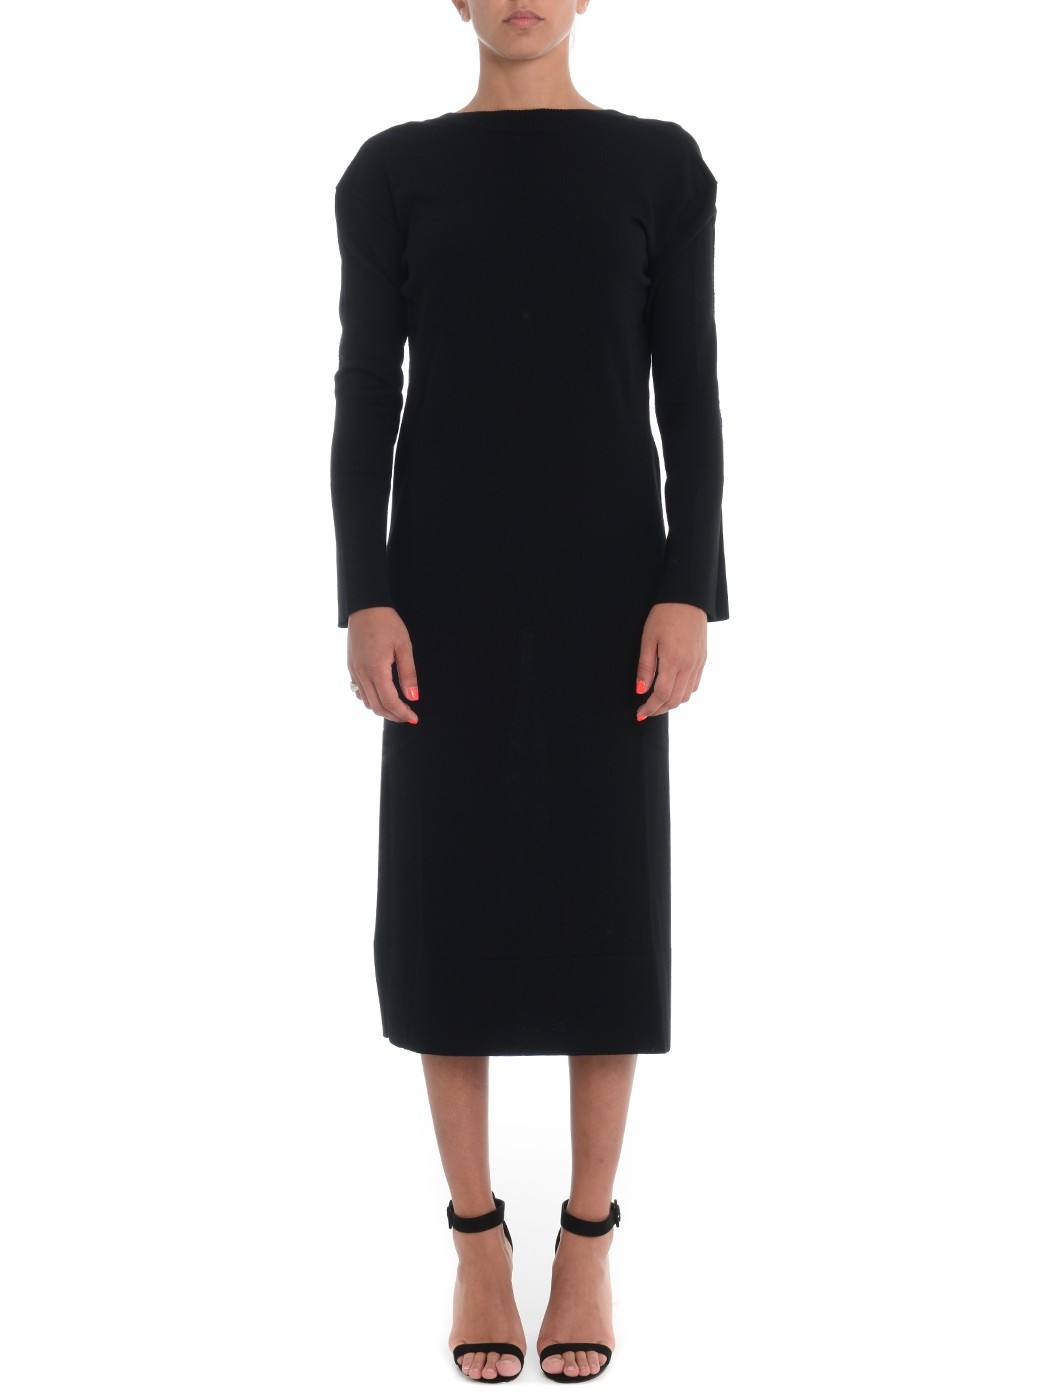 Erika Cavallini Dress | Winter 2021 Collection | Chirulli.com